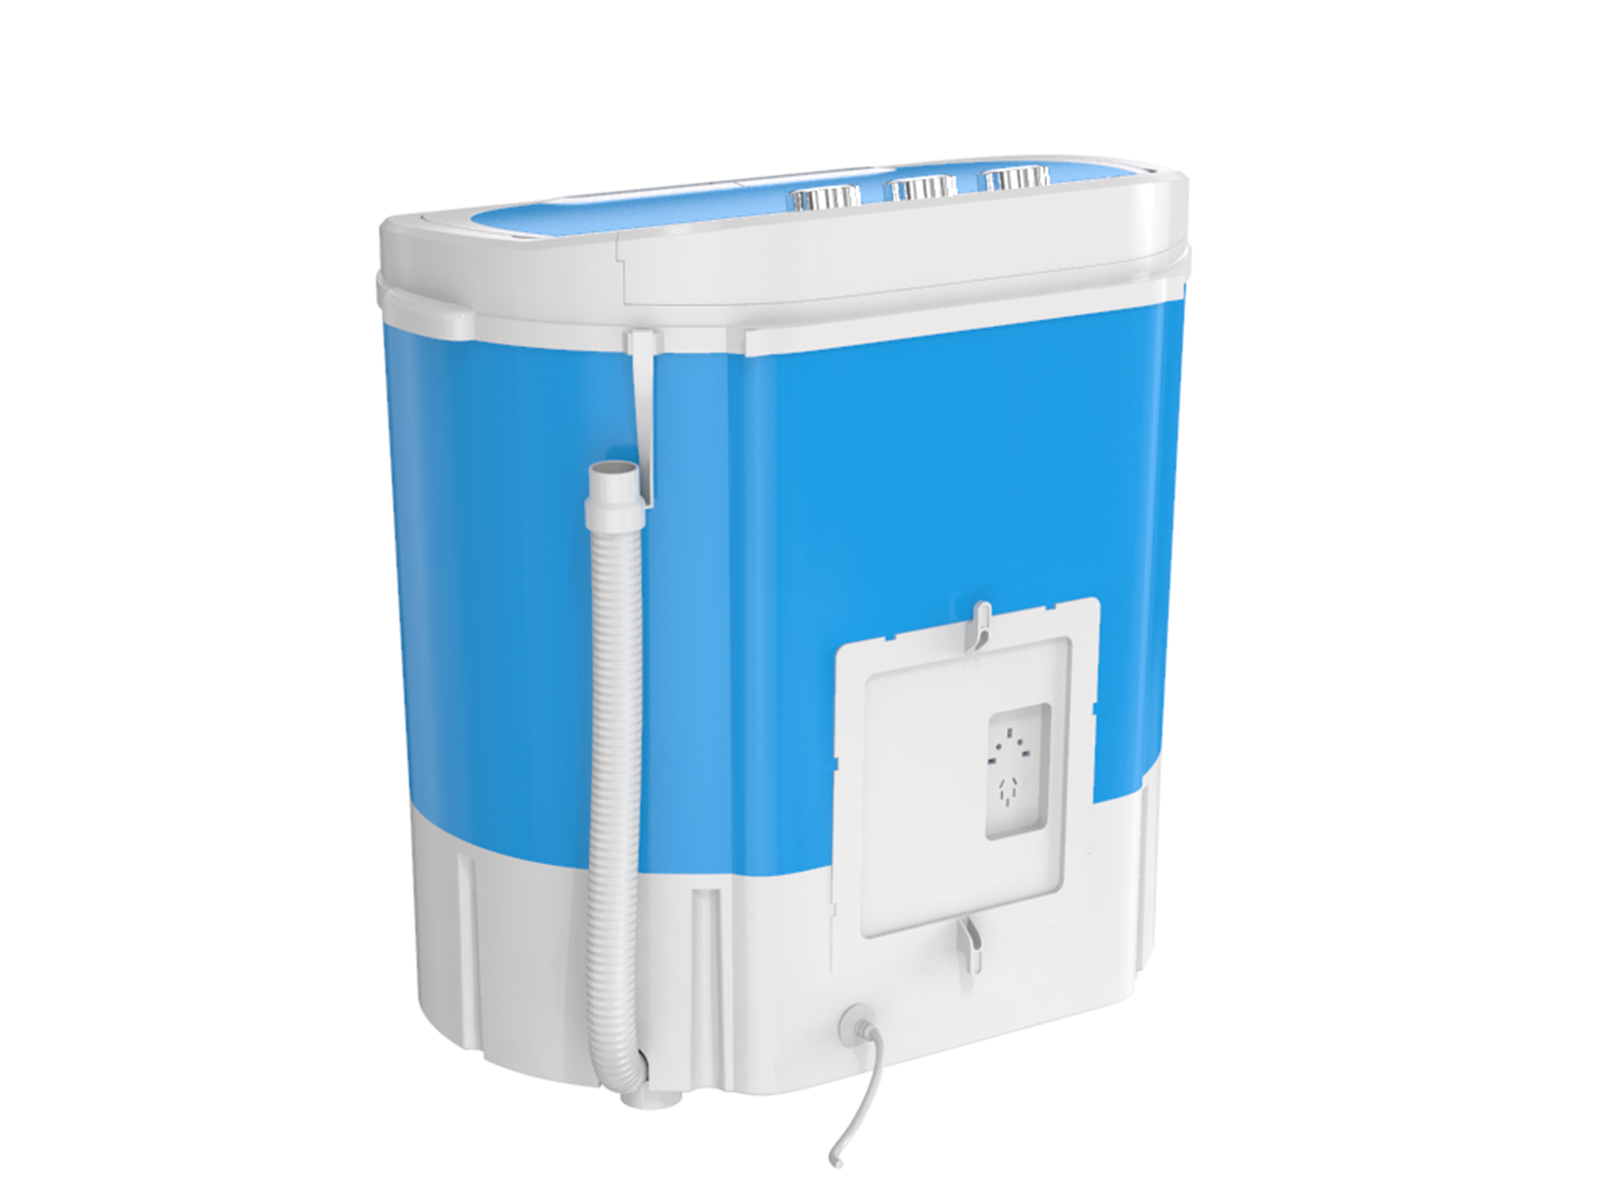 ZENY Portable Washing Machine Mini Twin Tub washing machine 13 lb capacity  with rotary dryer - AliExpress